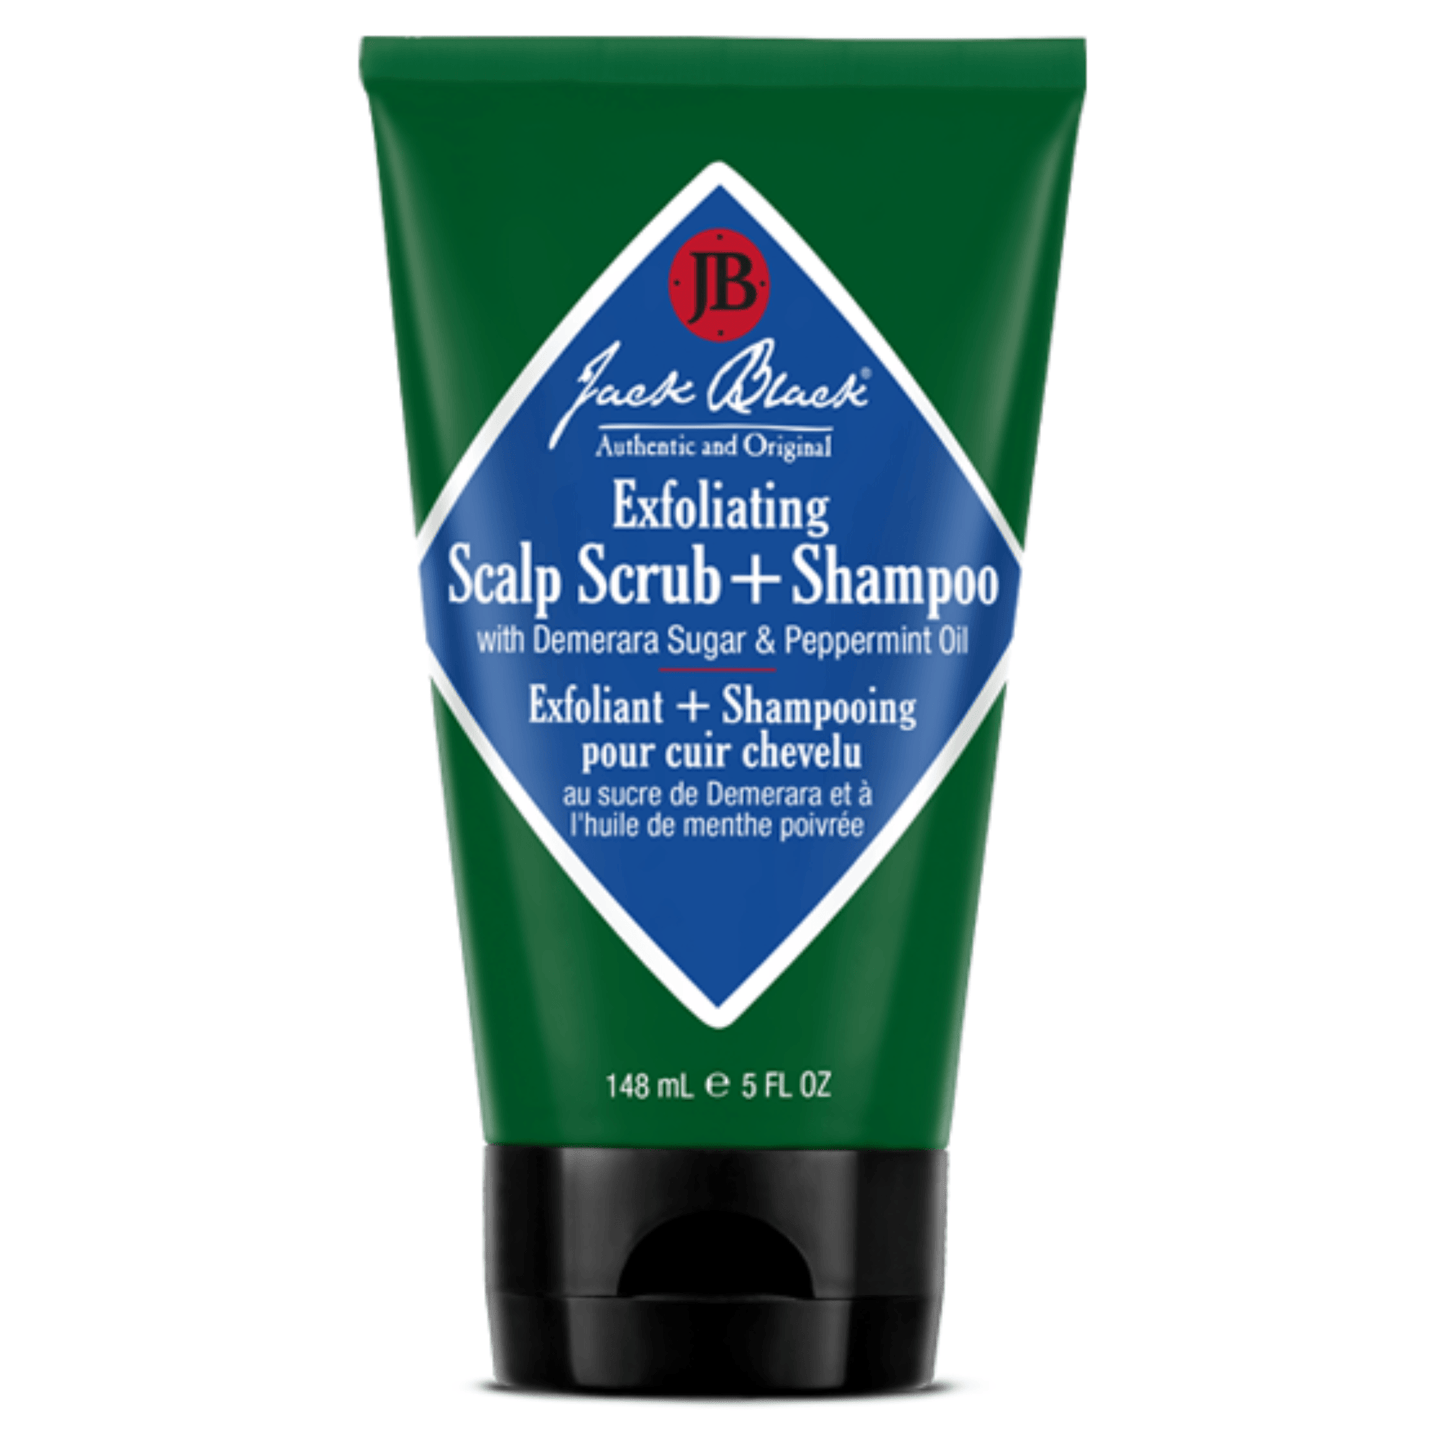 Primary Image Exfoliating Scalp Scrub & Shampoo